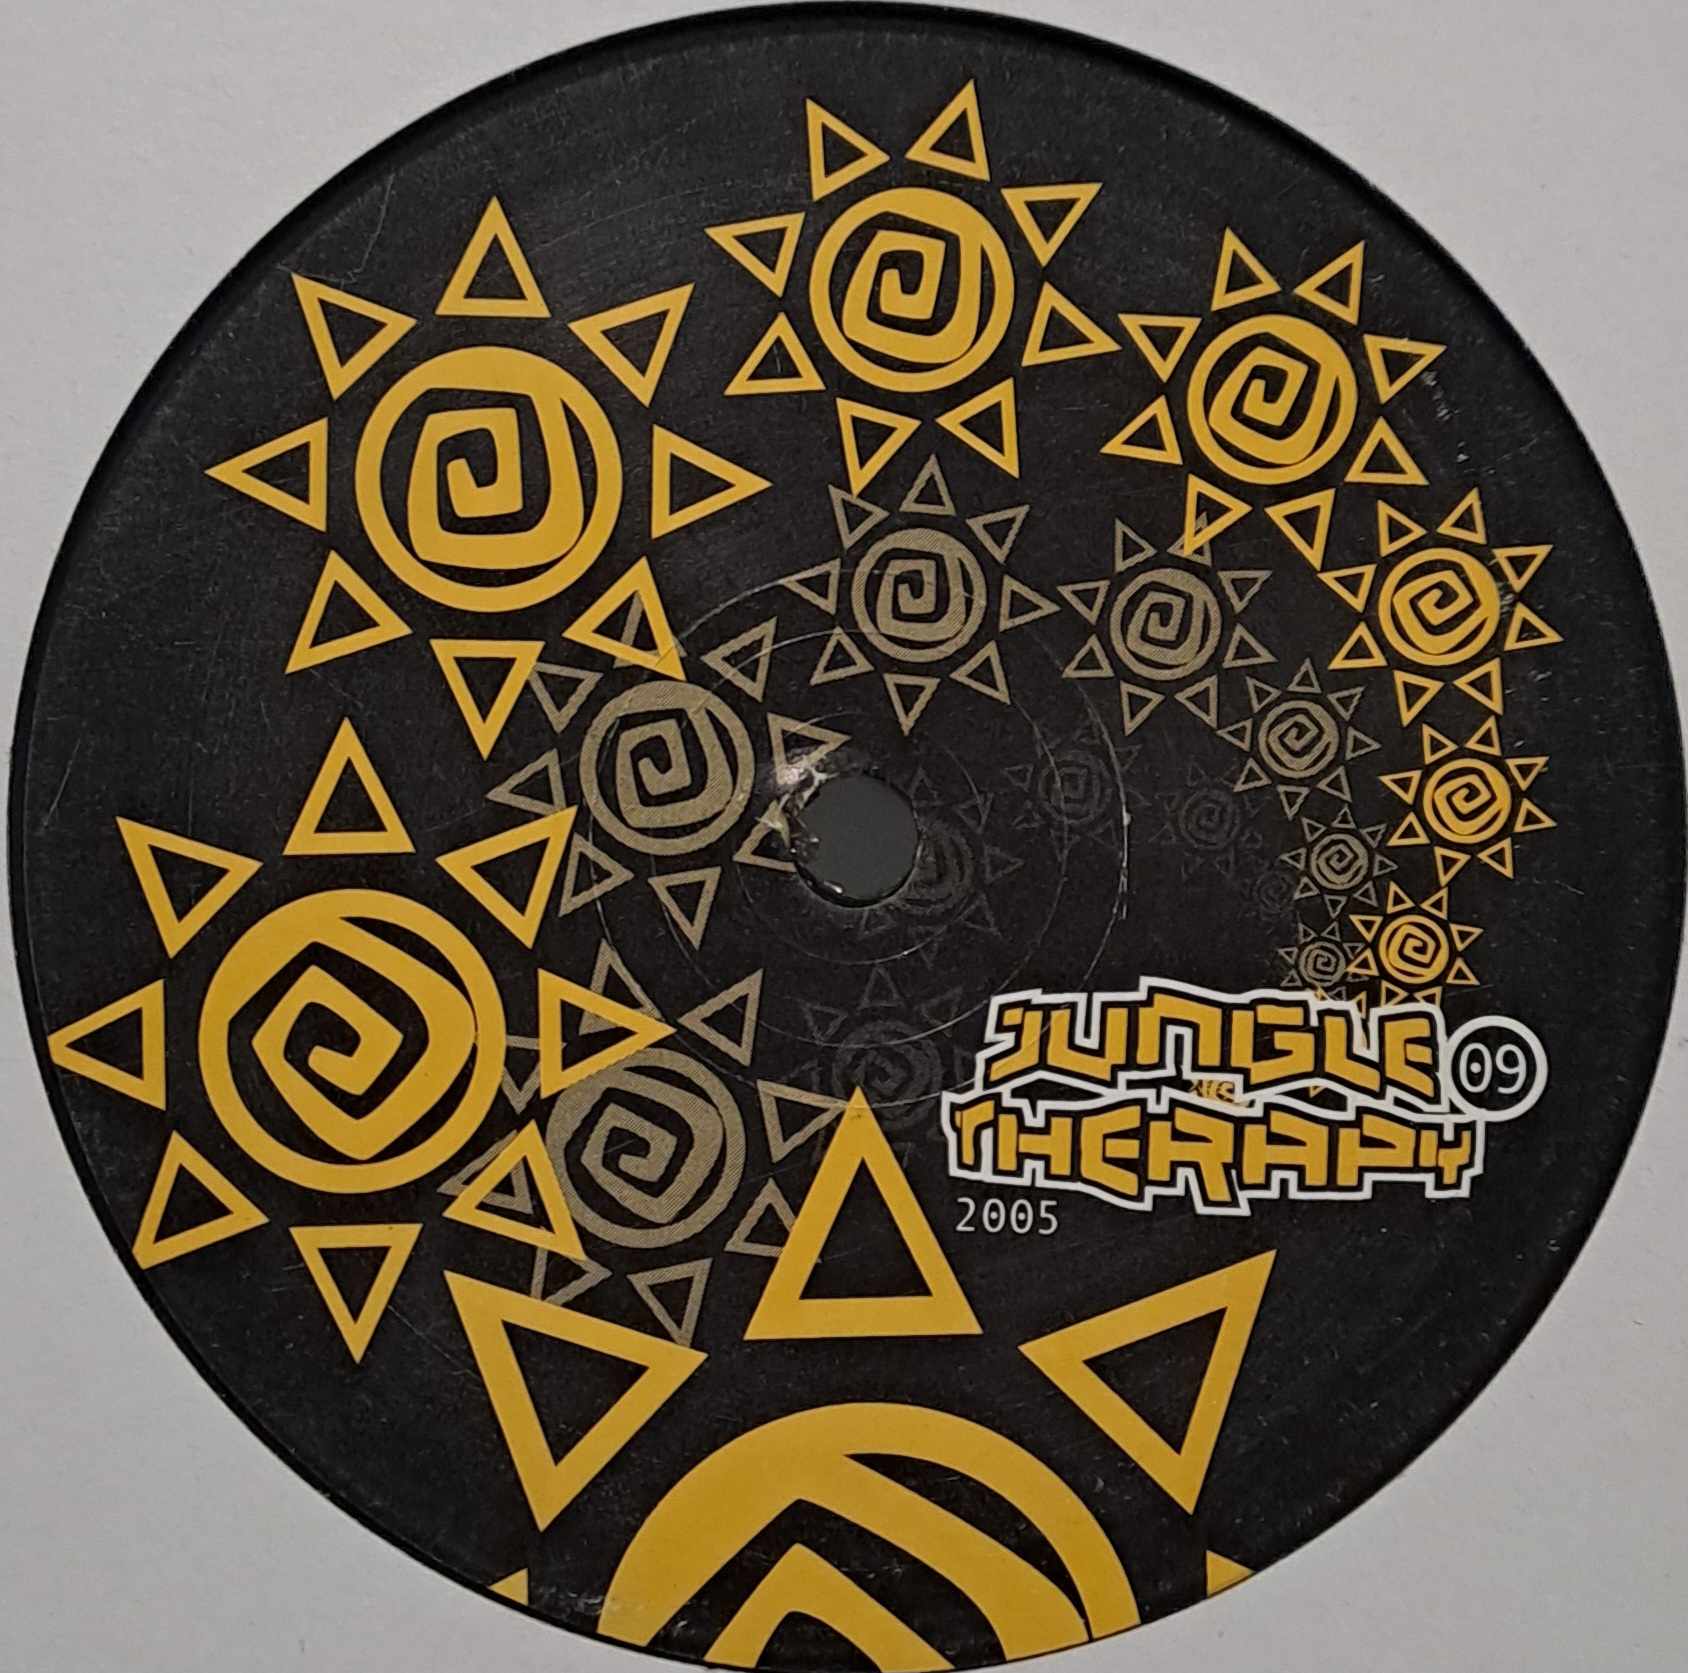 Jungle Therapy 009 - vinyle Ragga